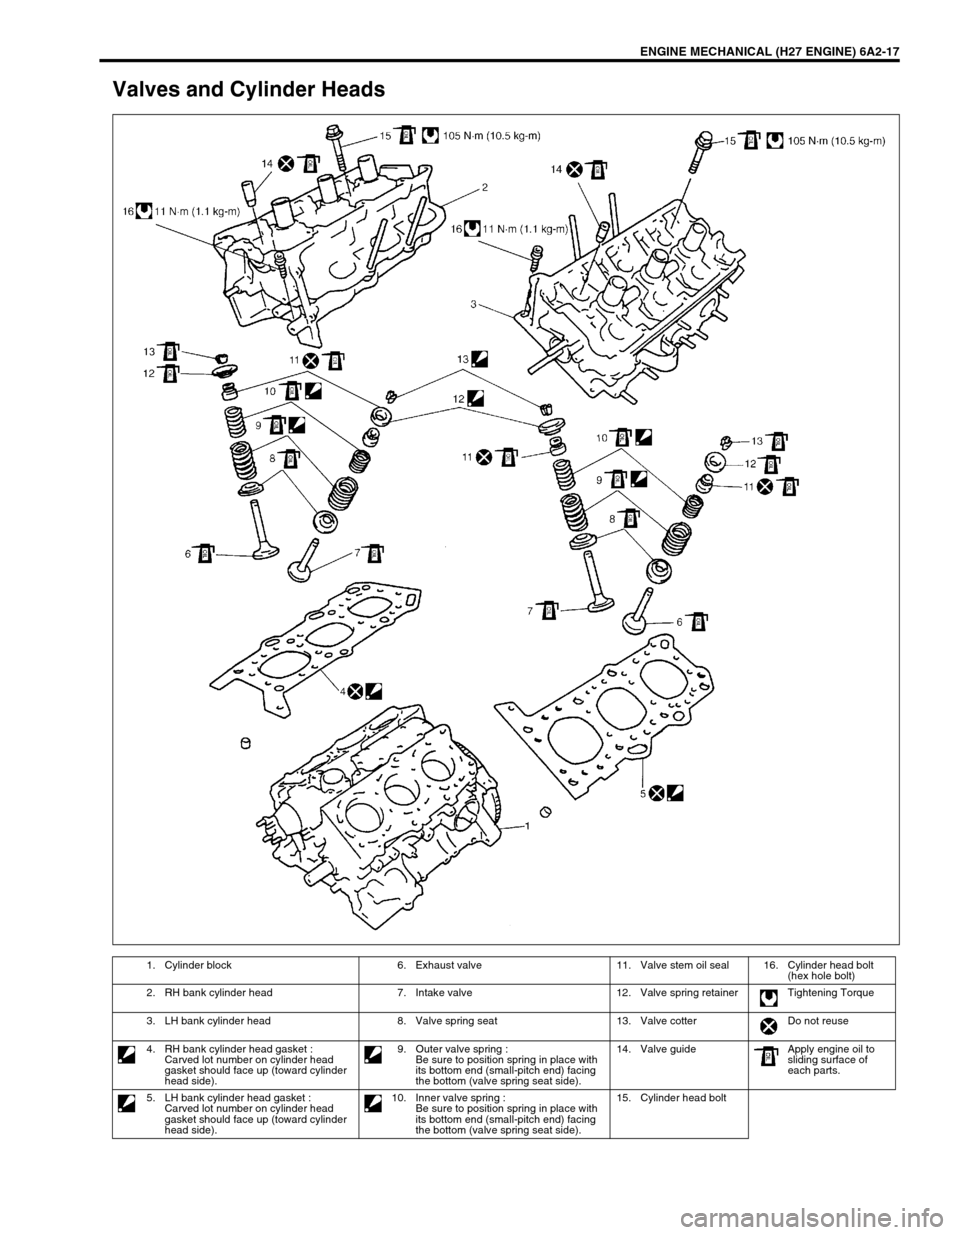 SUZUKI GRAND VITARA 1999 2.G Owners Guide ENGINE MECHANICAL (H27 ENGINE) 6A2-17
Valves and Cylinder Heads
1. Cylinder block 6. Exhaust valve 11. Valve stem oil seal 16. Cylinder head bolt 
(hex hole bolt)
2. RH bank cylinder head 7. Intake va